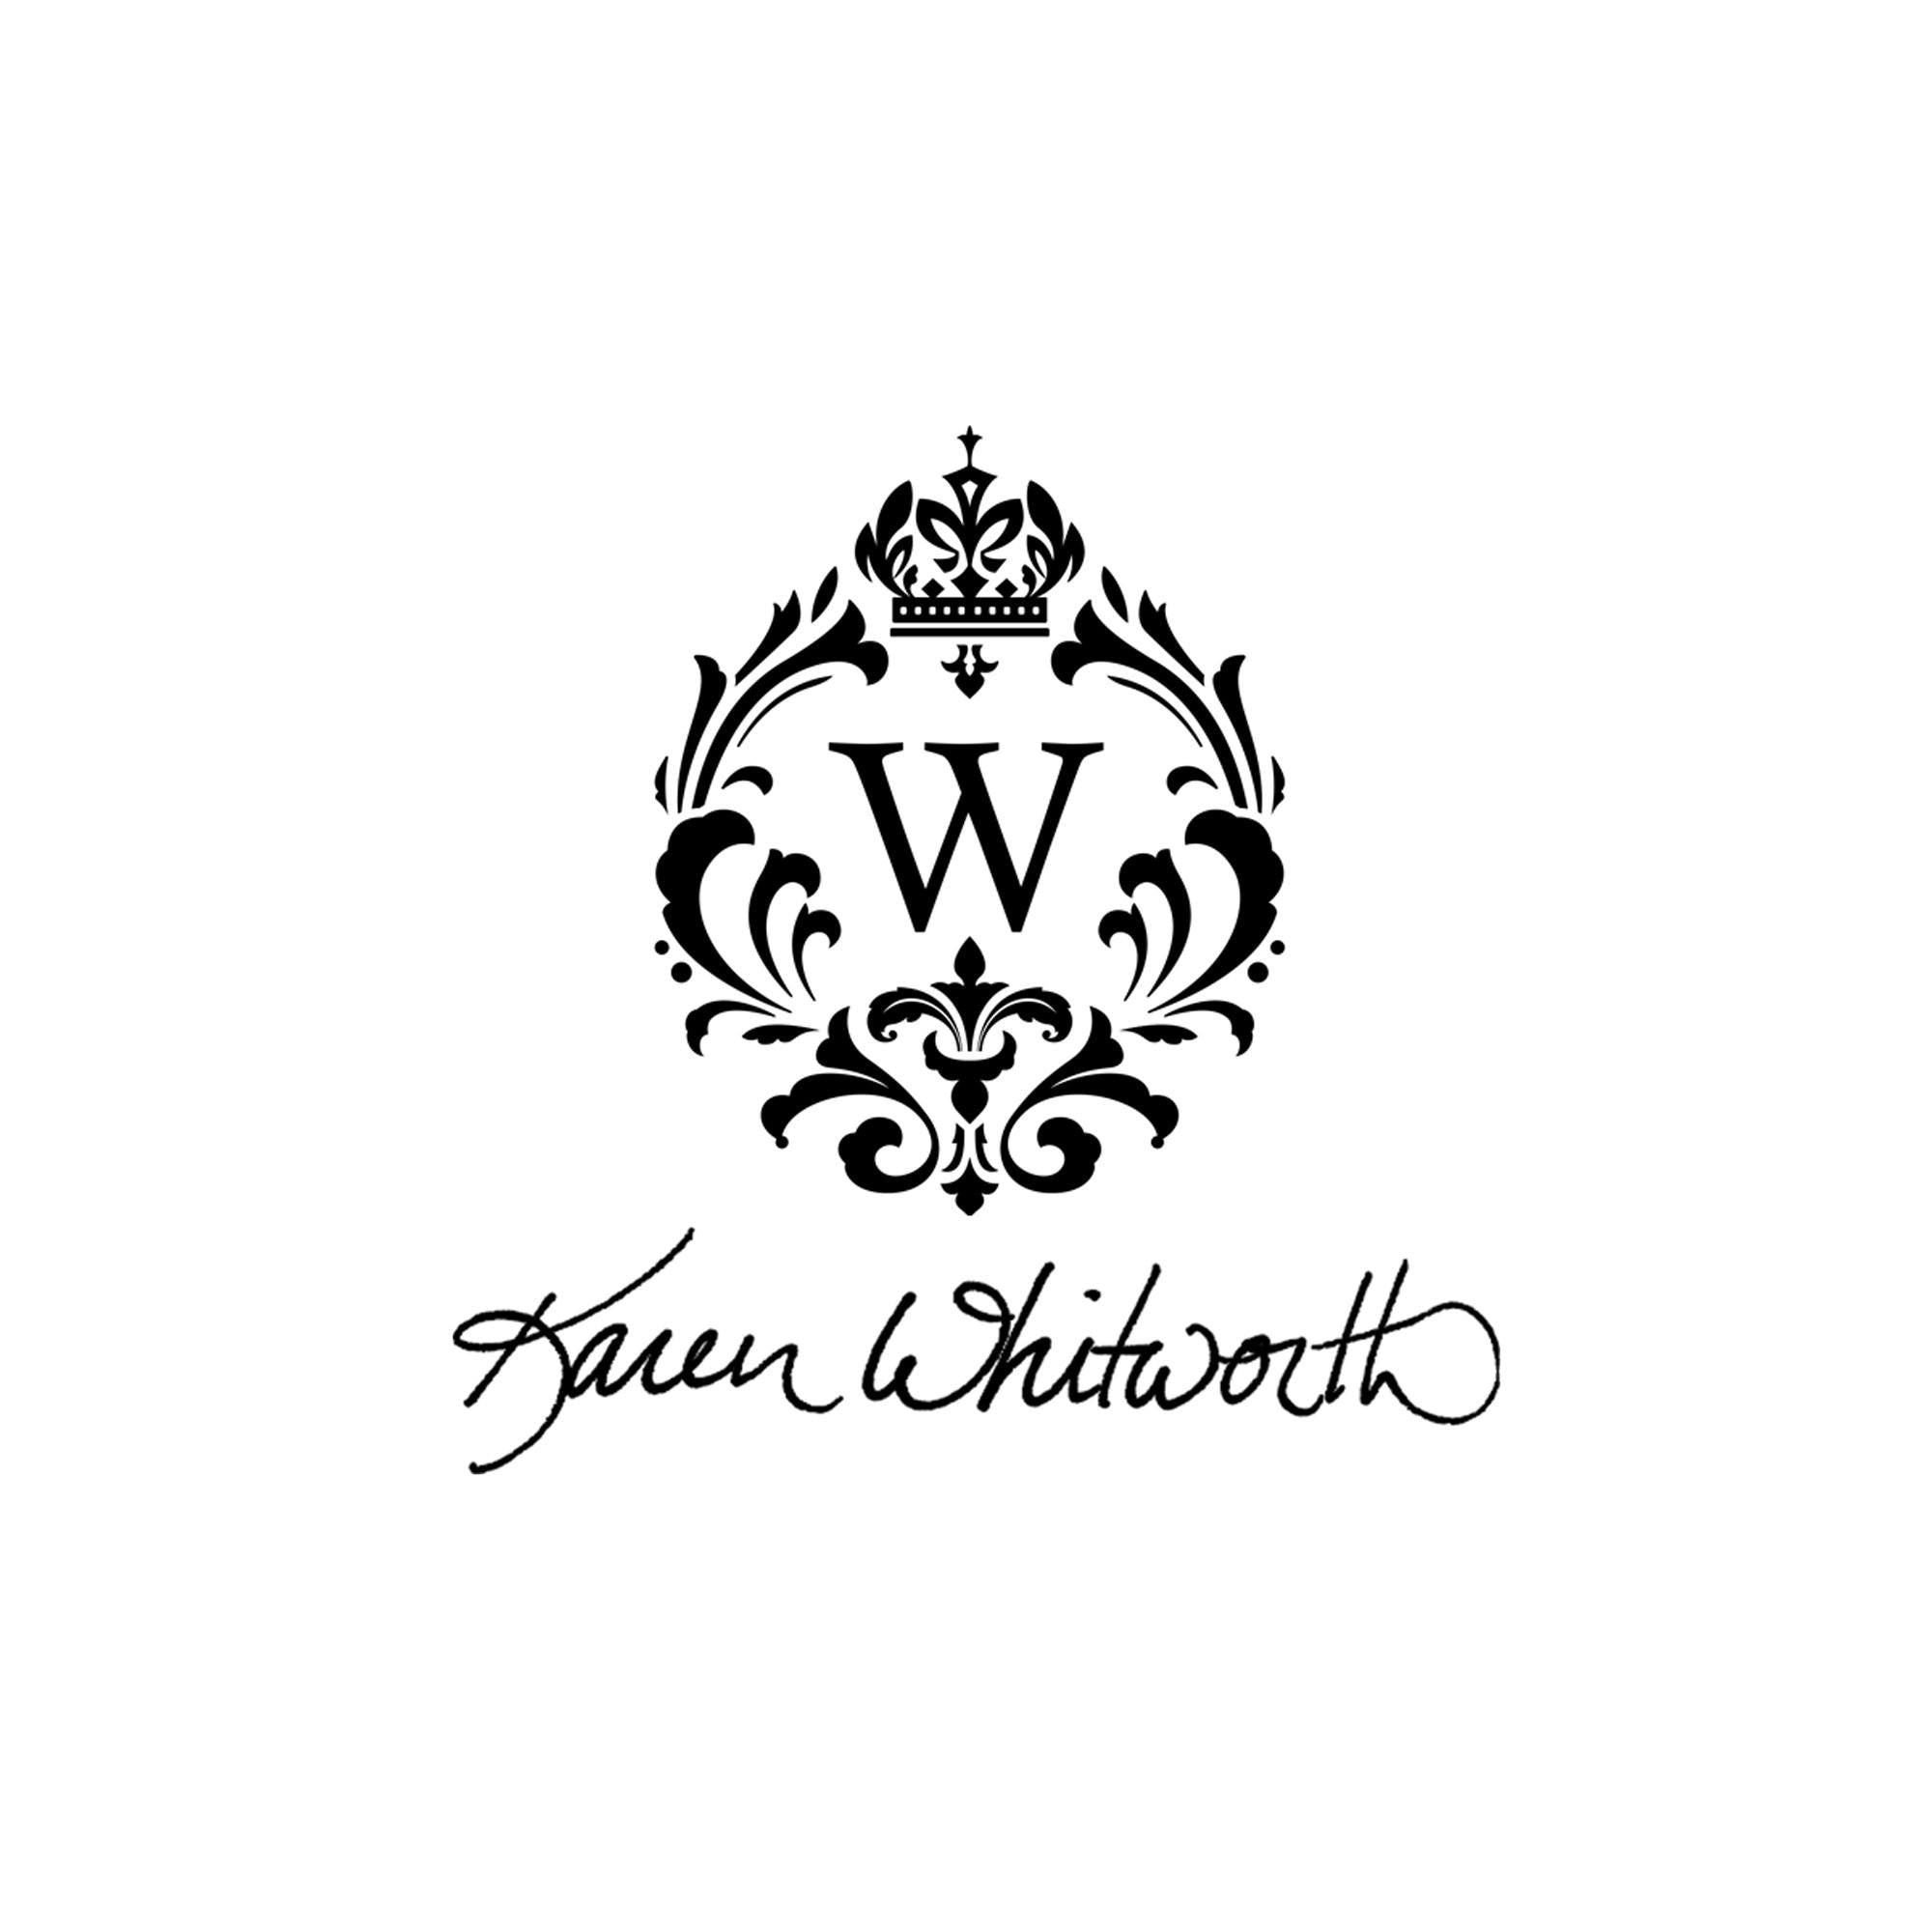 Karen Whitworth Artist Logo and Signature